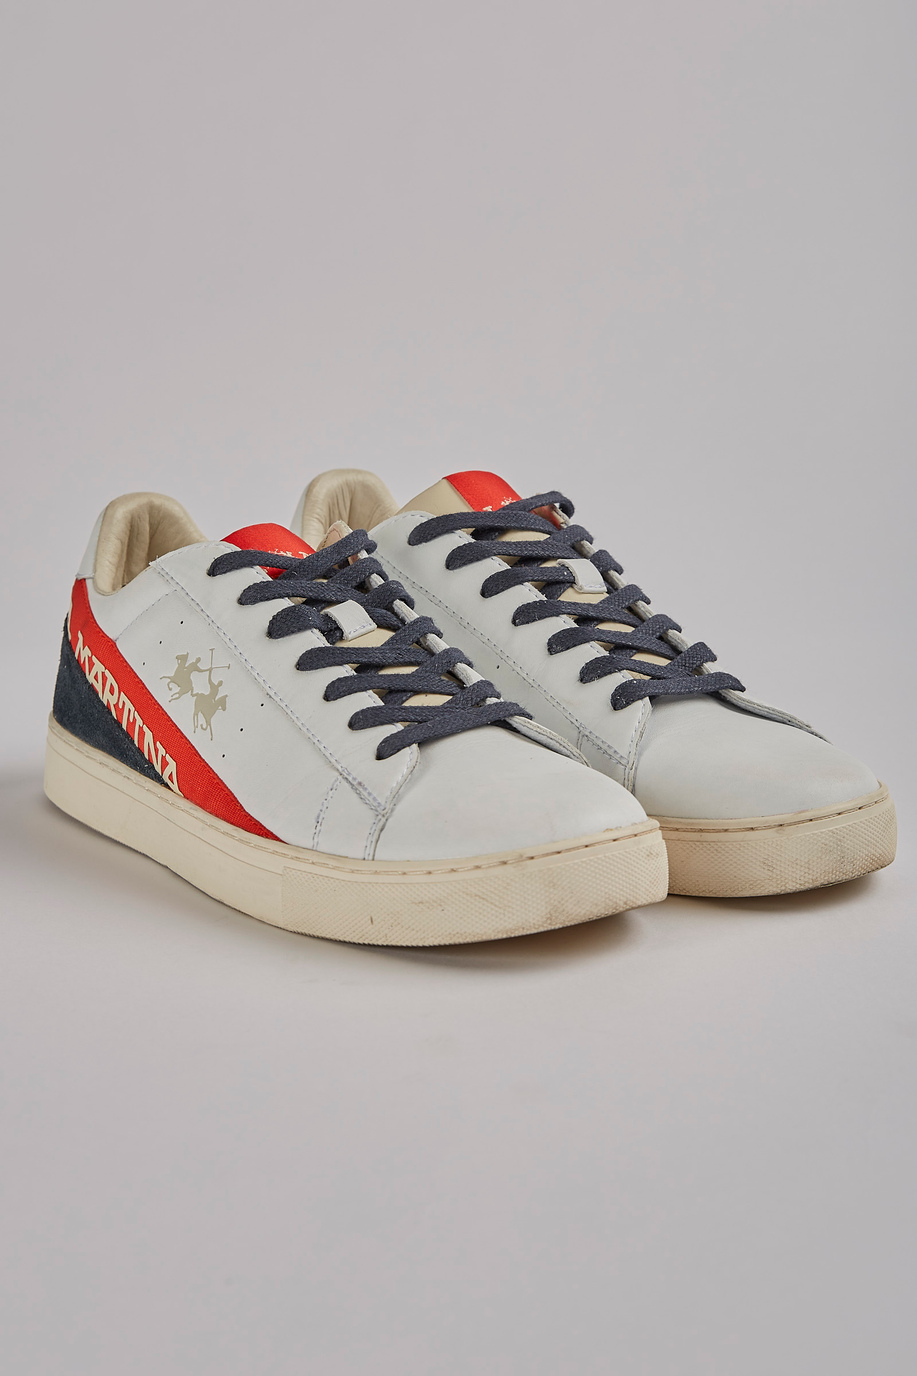 Wildleder Sneaker - -40% | archive | La Martina - Official Online Shop